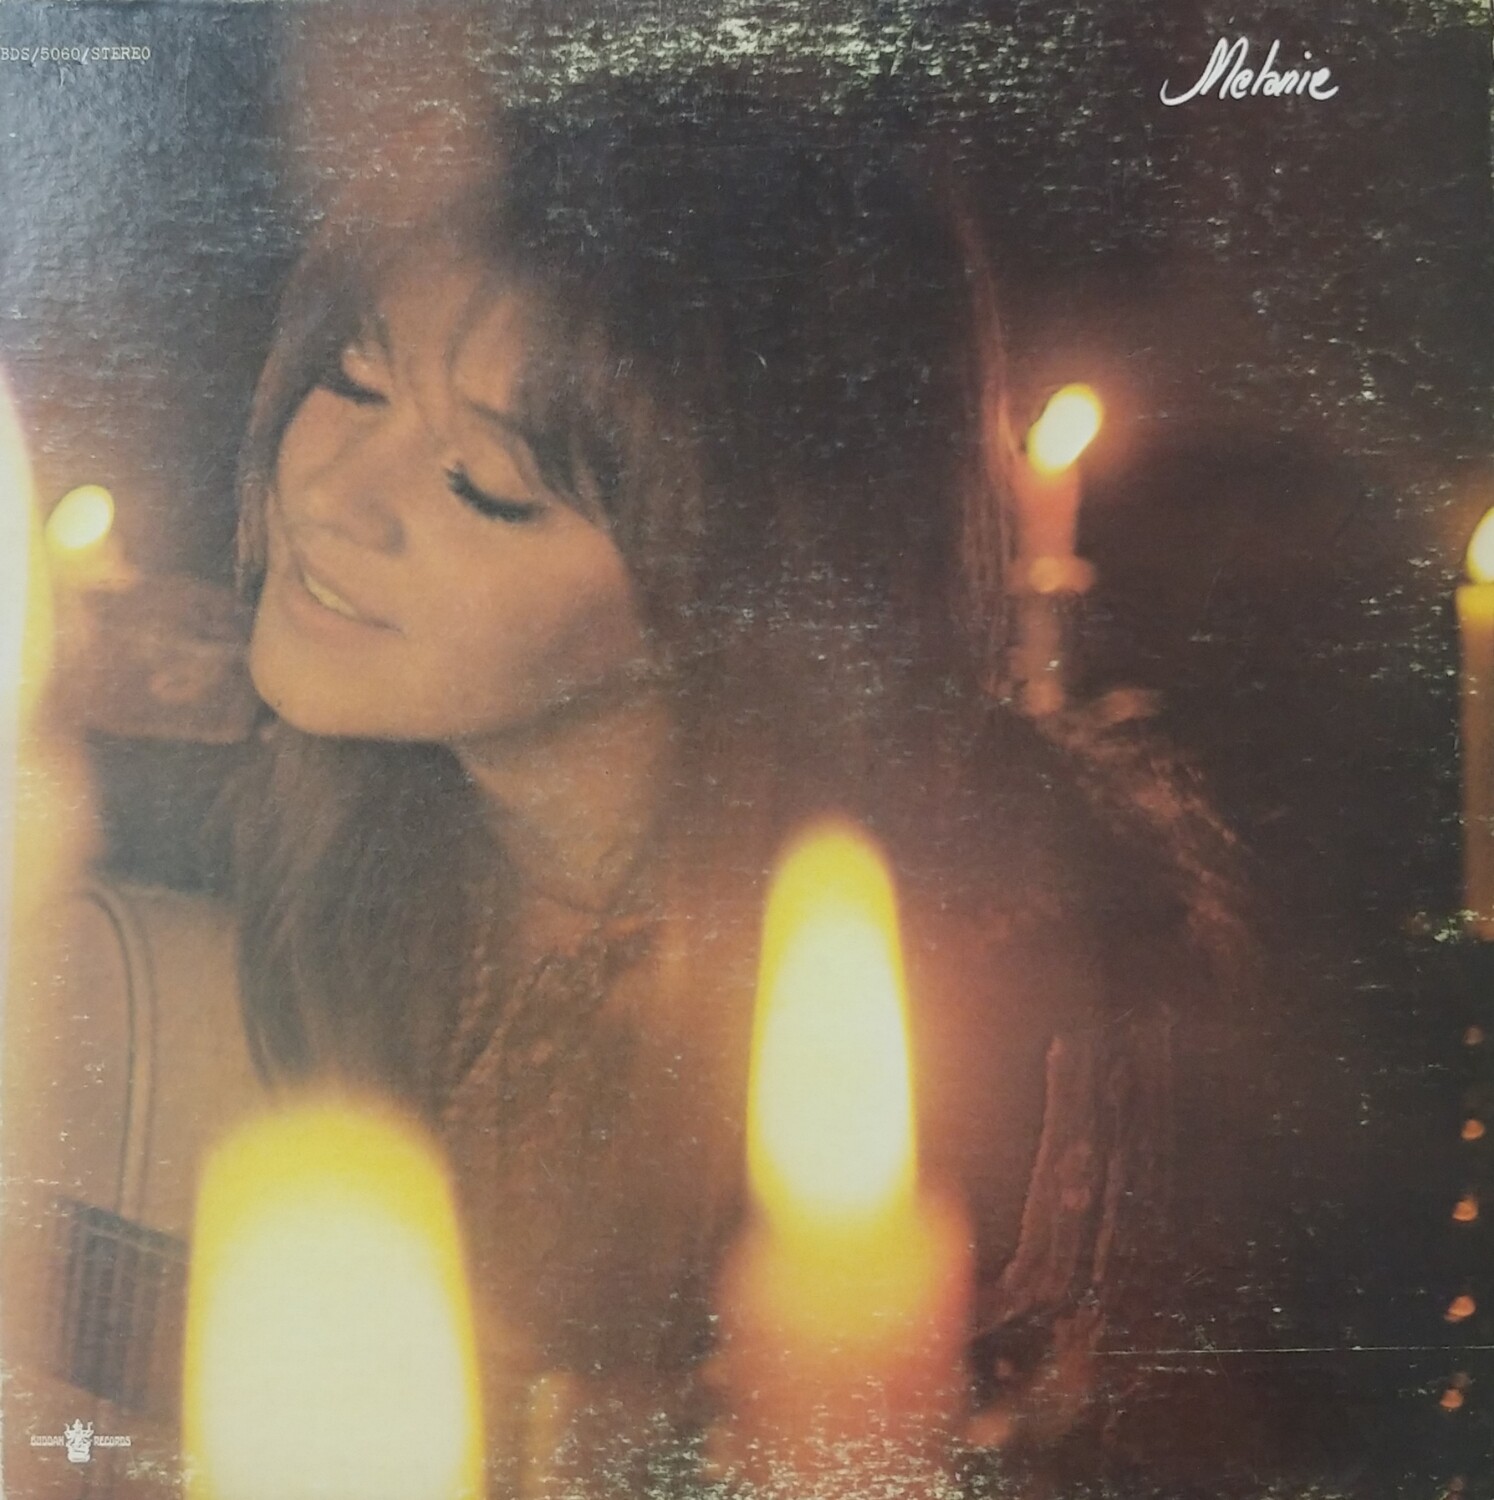 Melanie - Candle in the rain